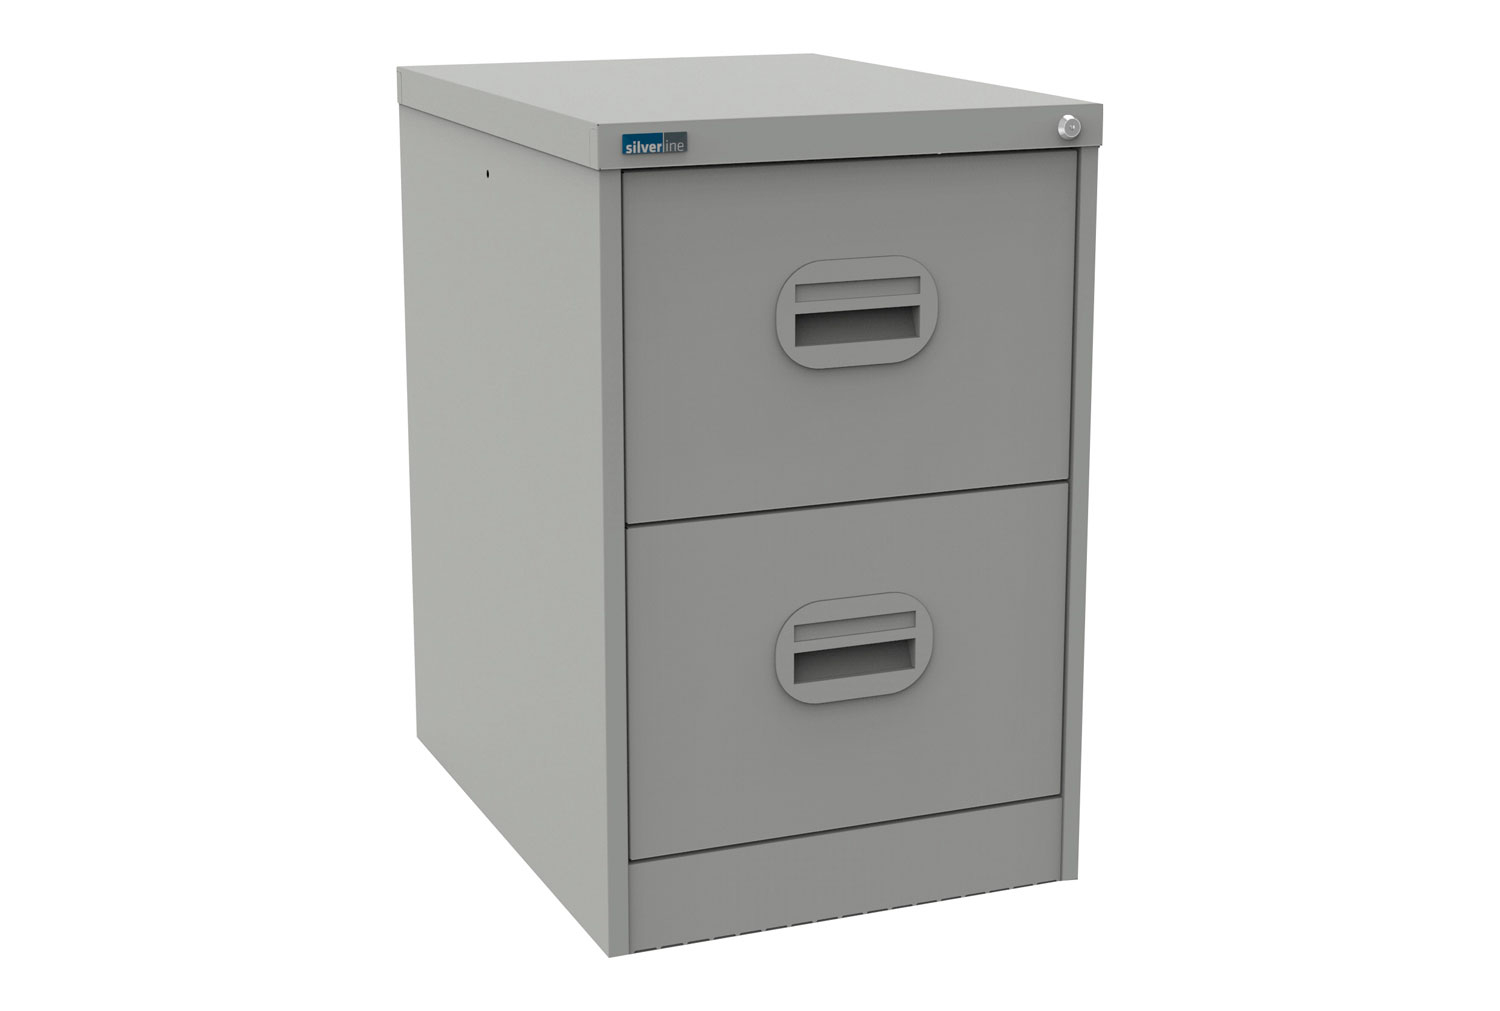 Silverline Kontrax 2 Drawer Office Filing Cabinet, 2 Drawer - 46wx62dx71h (cm), Light Grey